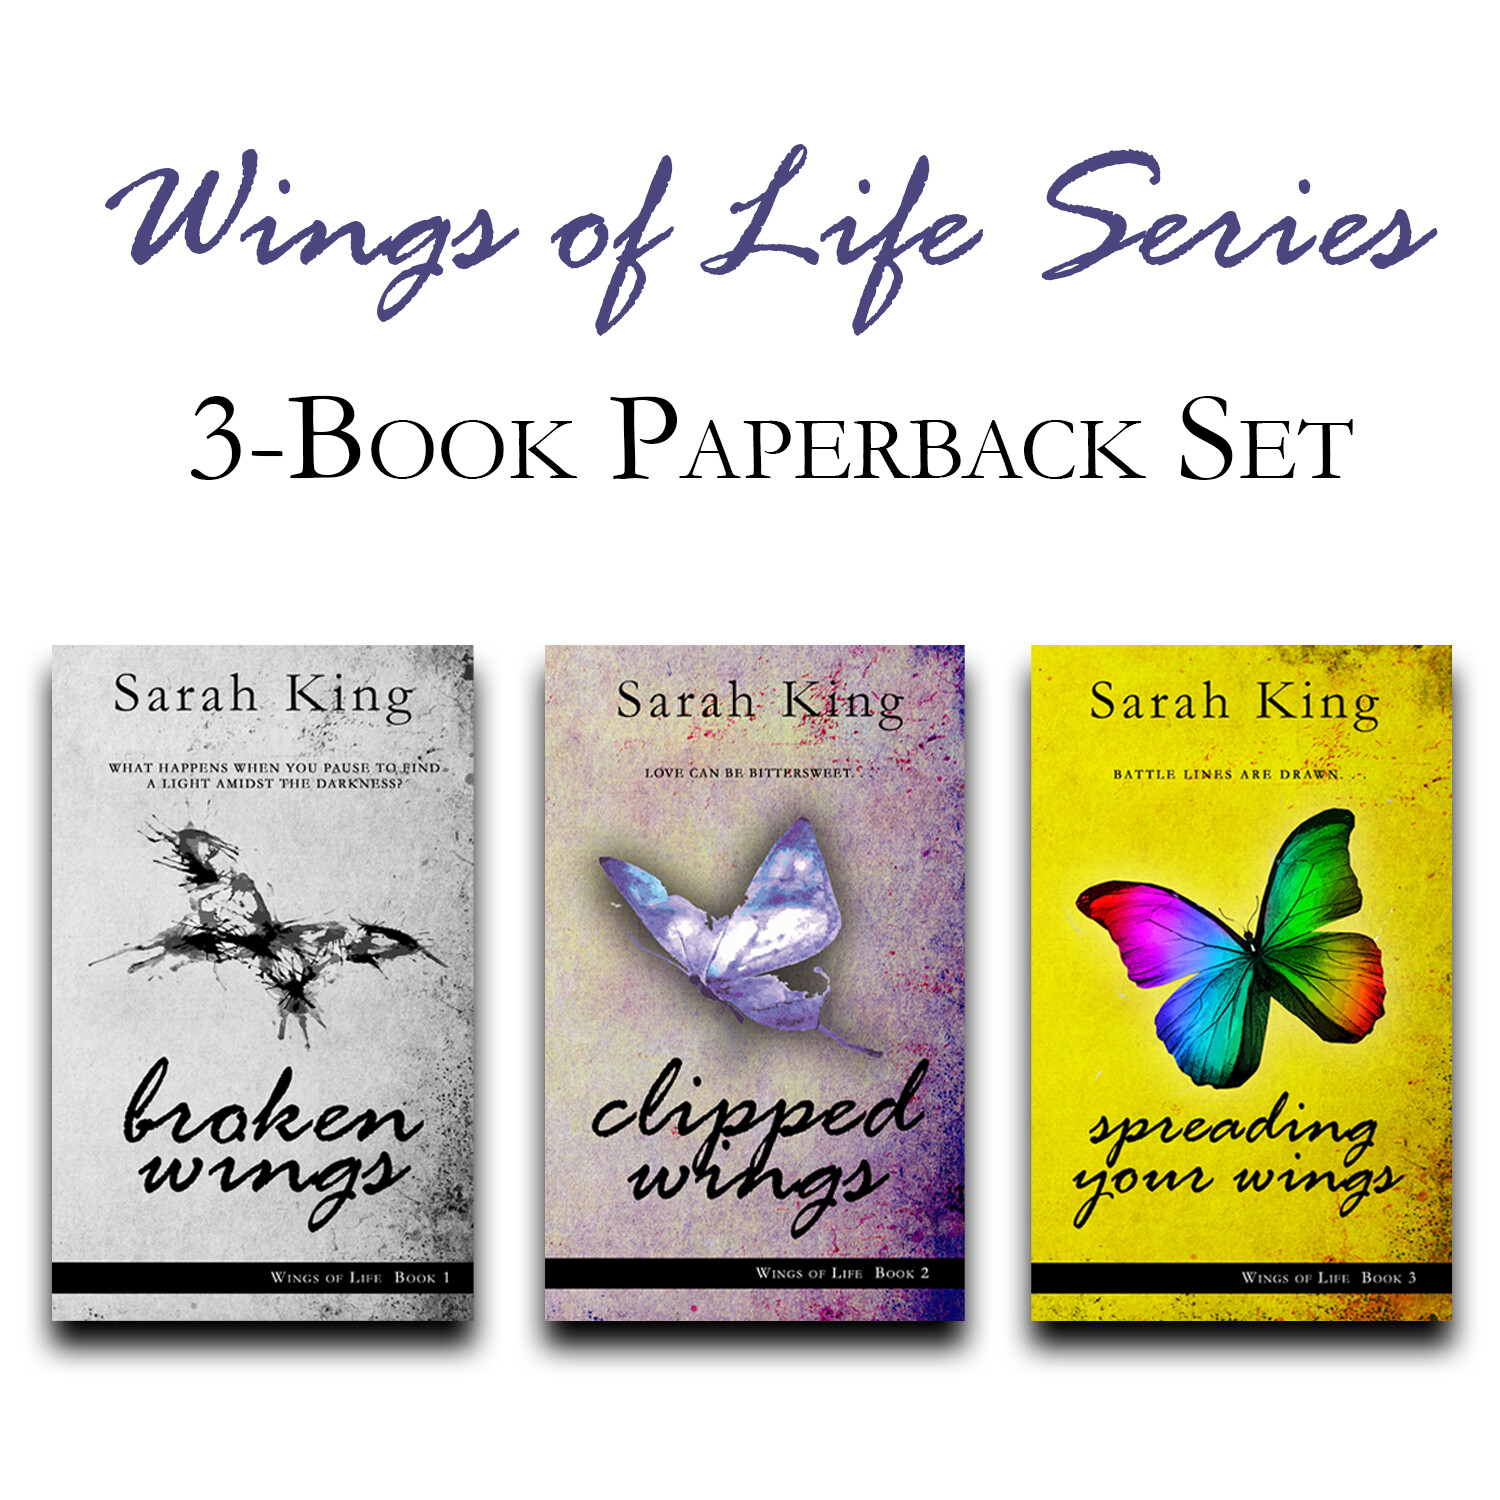 Wings of Life Series (Books 1-3, Paperback Set)